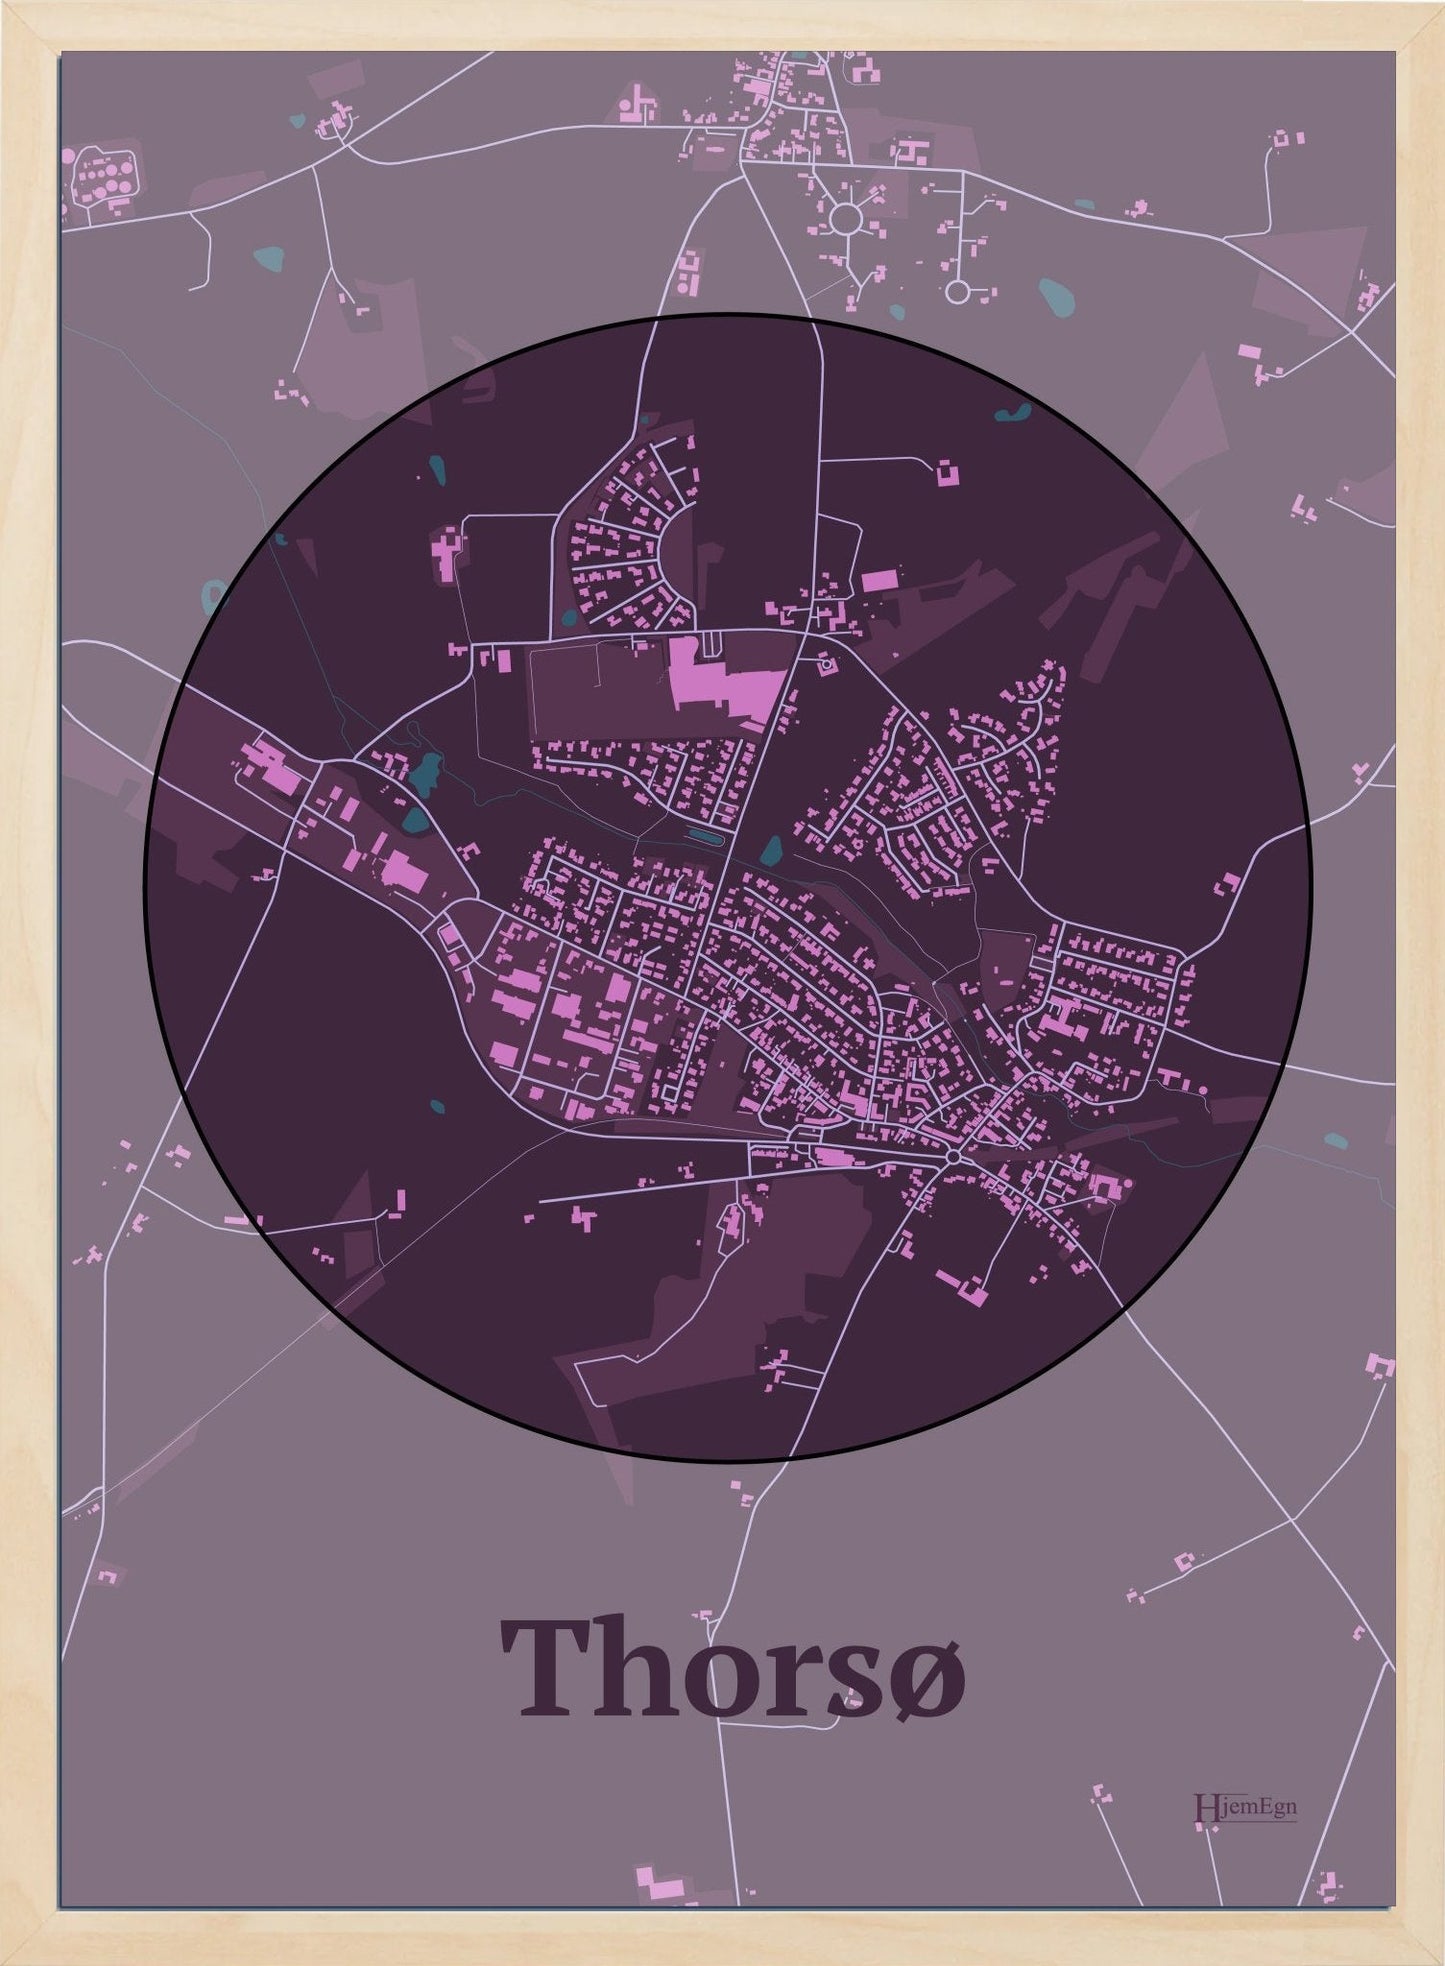 Thorsø plakat i farve mørk rød og HjemEgn.dk design centrum. Design bykort for Thorsø